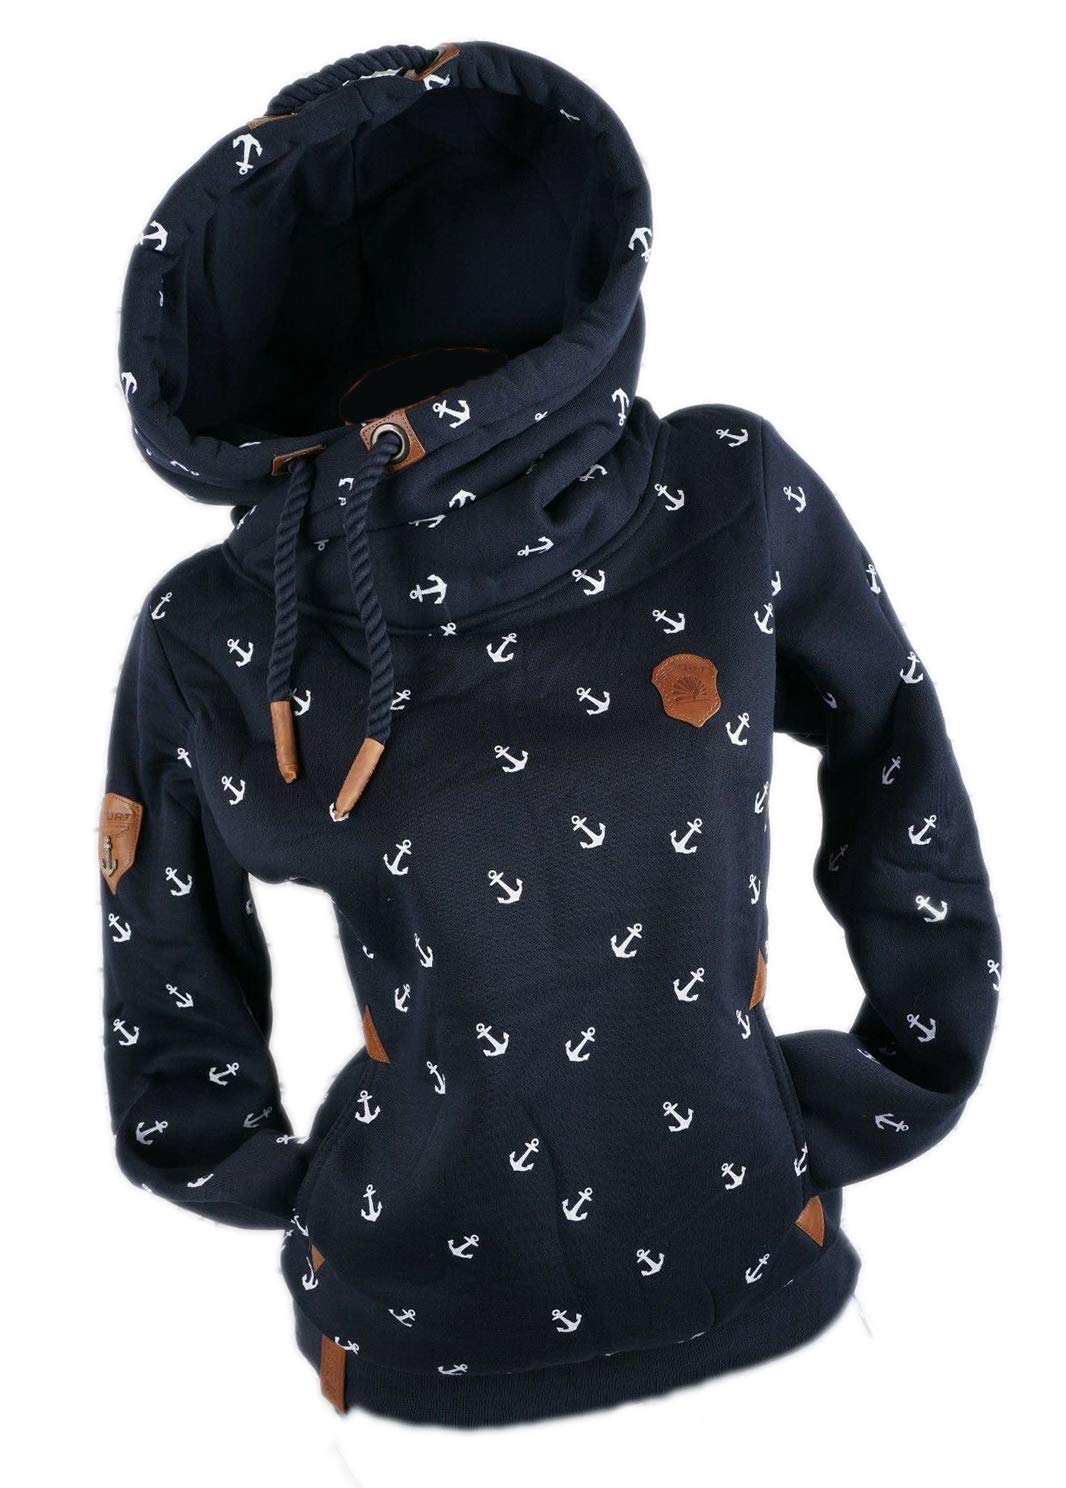 xy Damen Kapuzenpullover Hoodie Sweatshirt Warmer Fleece Pulli (Blau, XL)